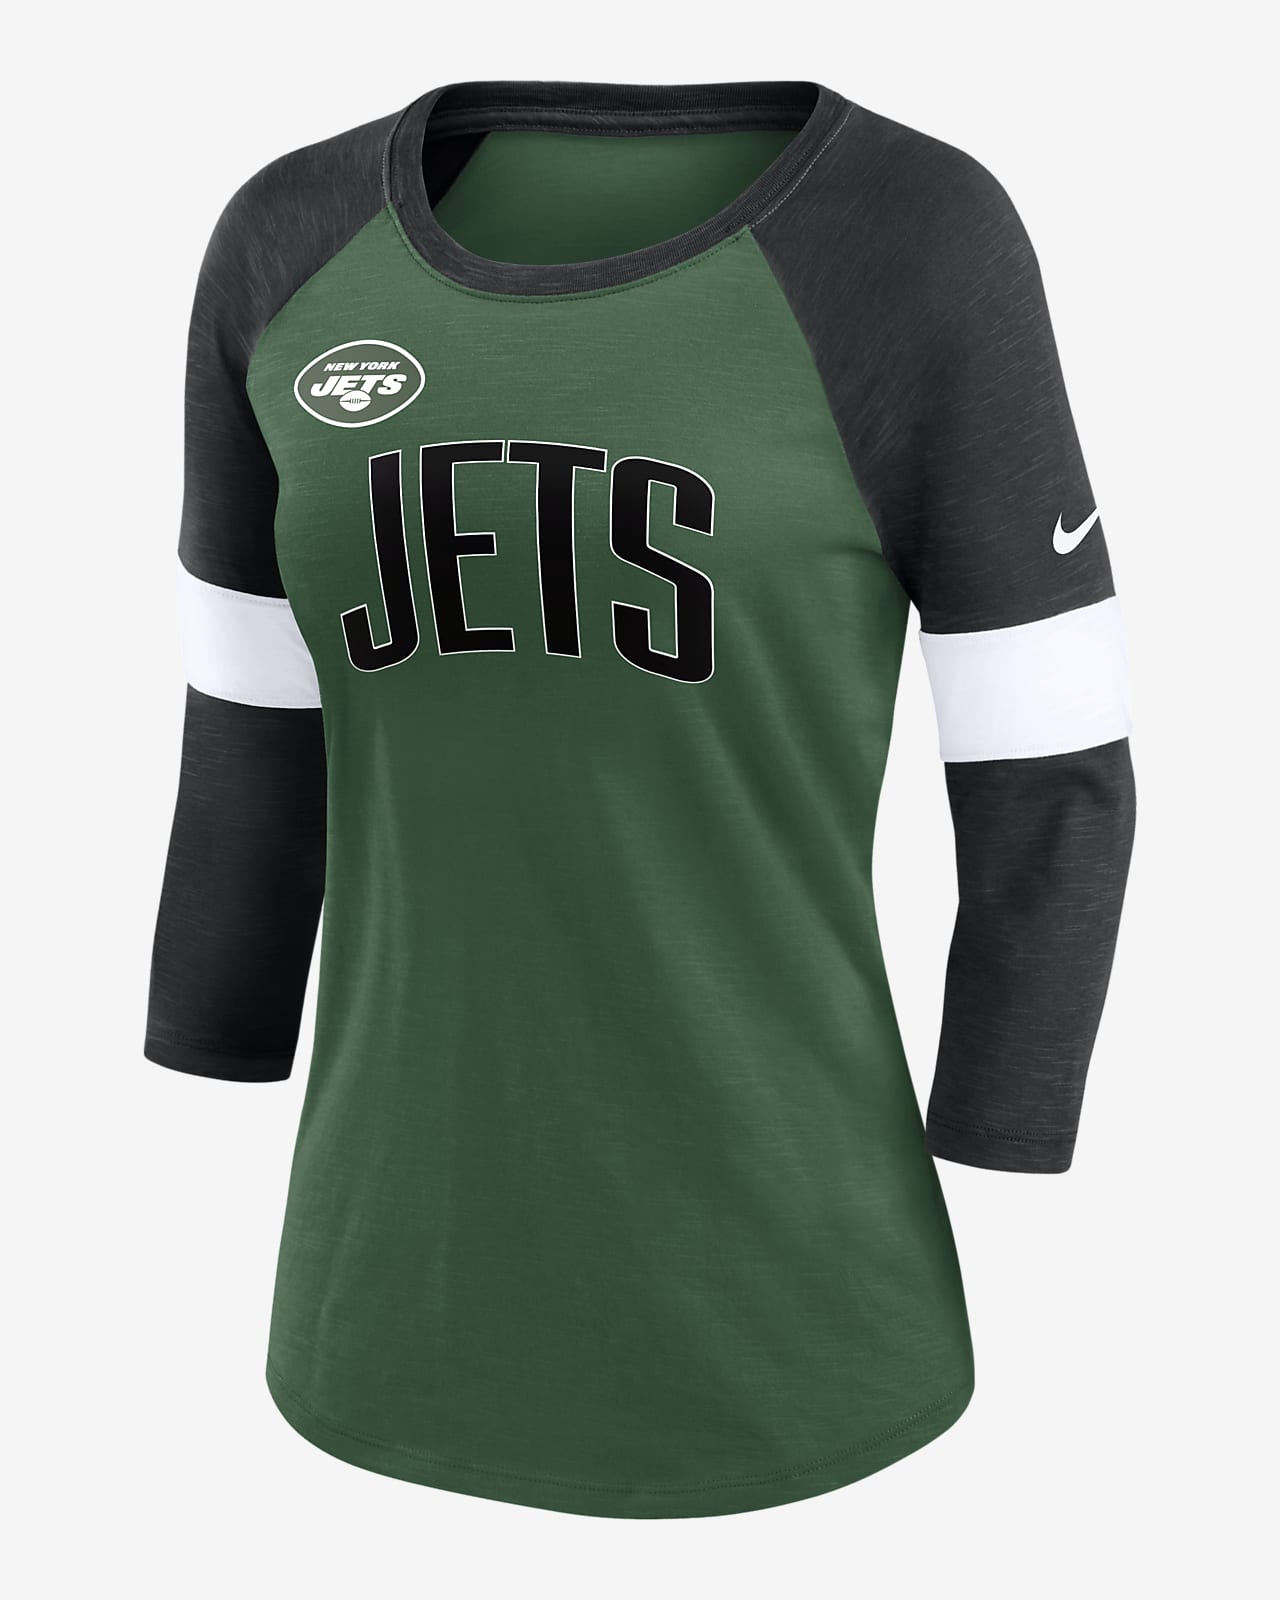 Nike Pride (NFL New York Jets) Women's 3/4-Sleeve T-Shirt.